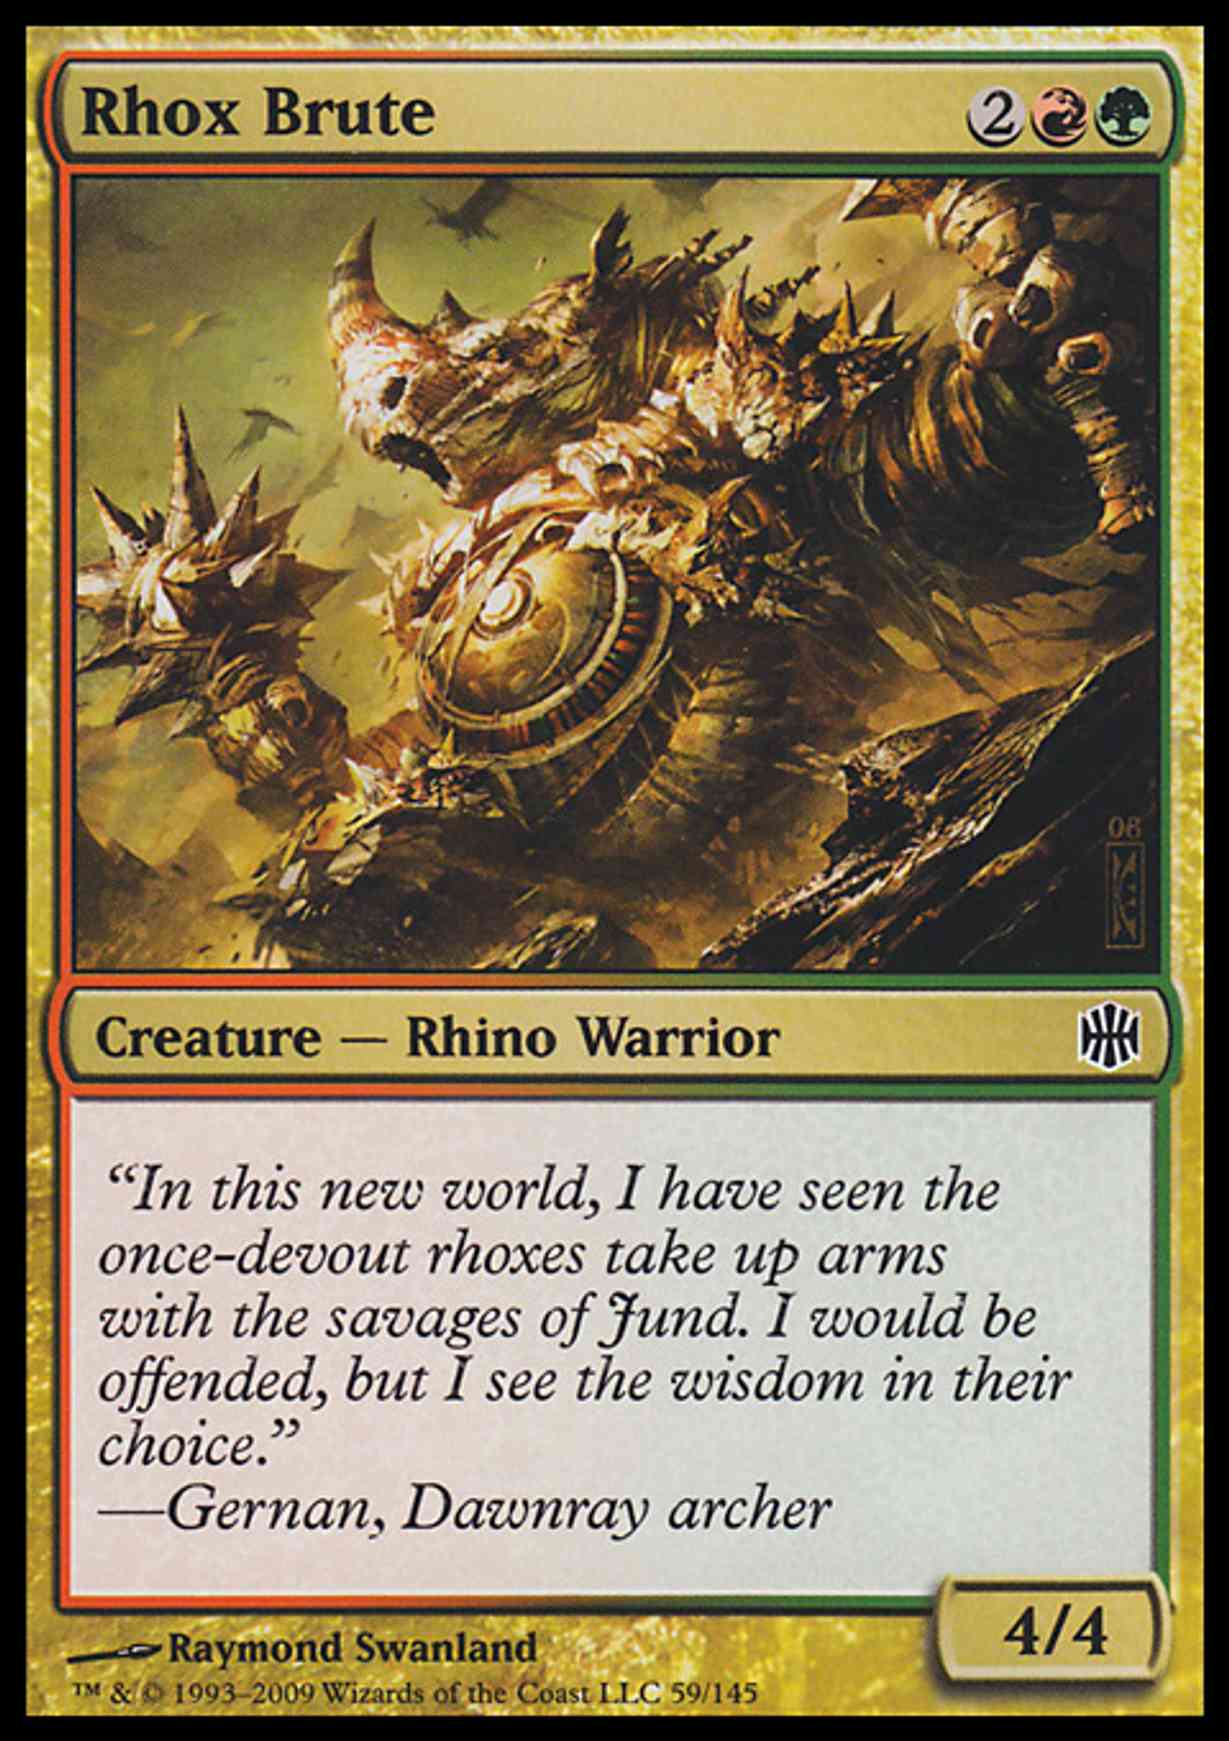 Rhox Brute magic card front